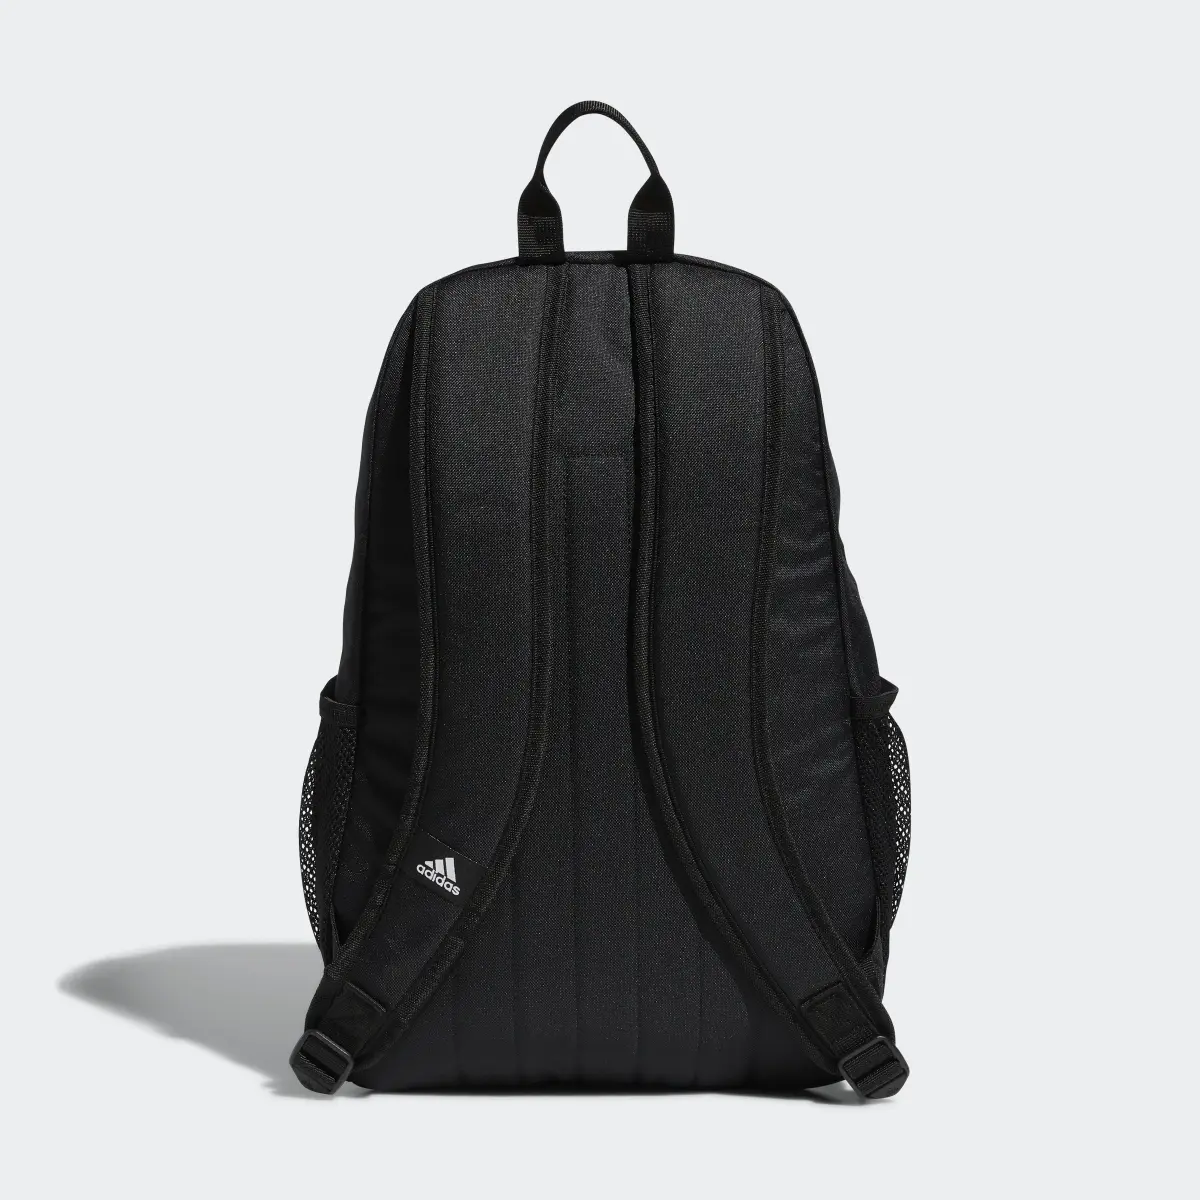 Adidas Creator Backpack. 3